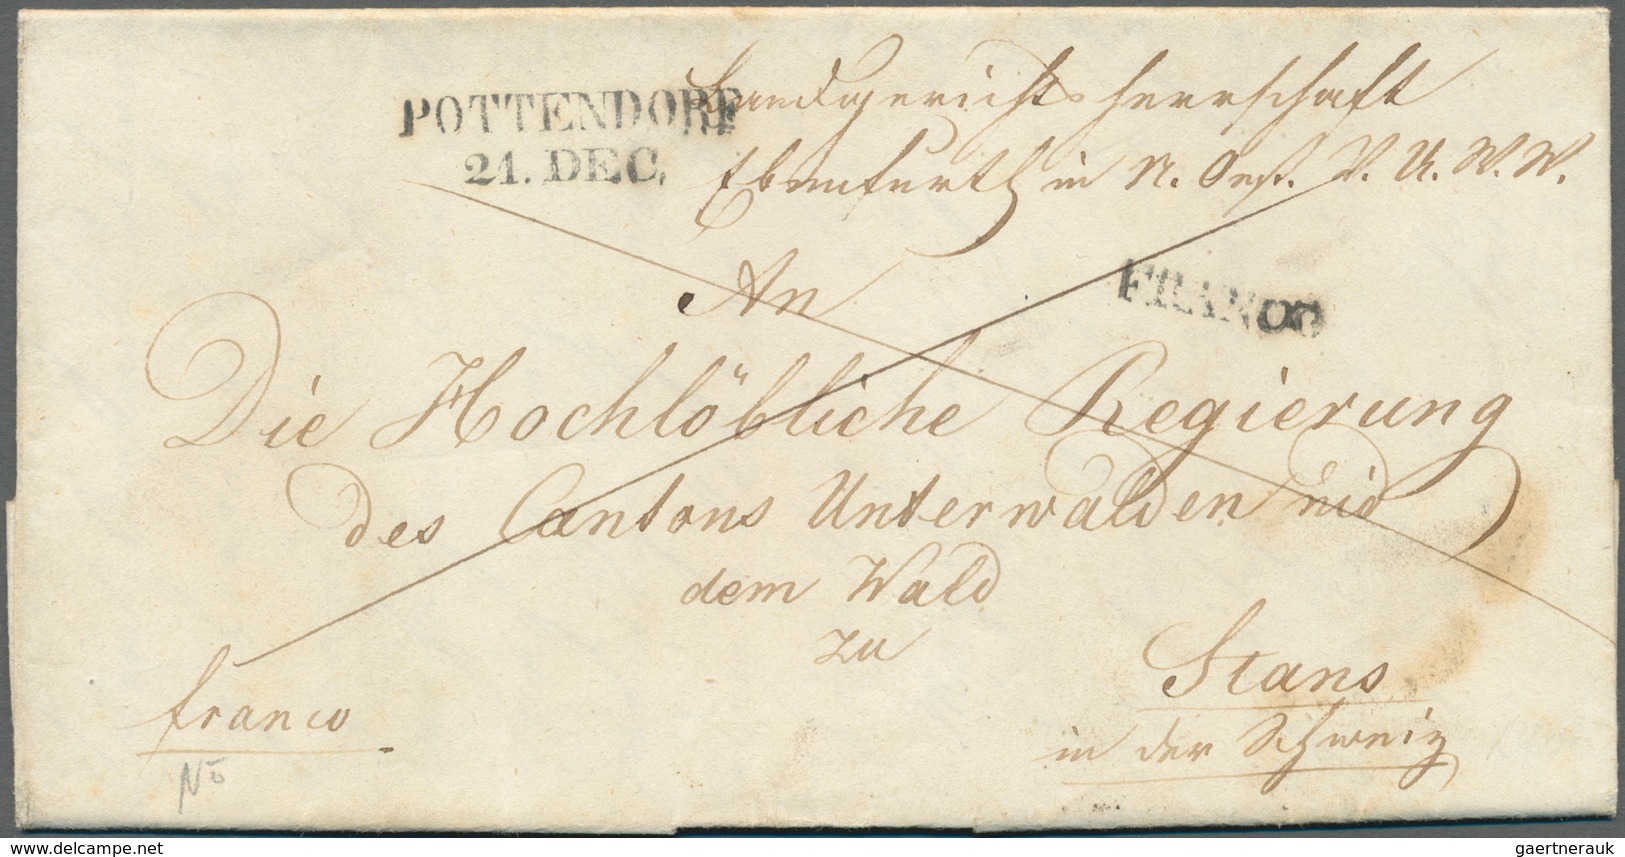 28549 Europa: 1800/1870, interesting lot of ca. 38 folded letters from BELGIUM (5), NETHERLAND (19), AUSTR